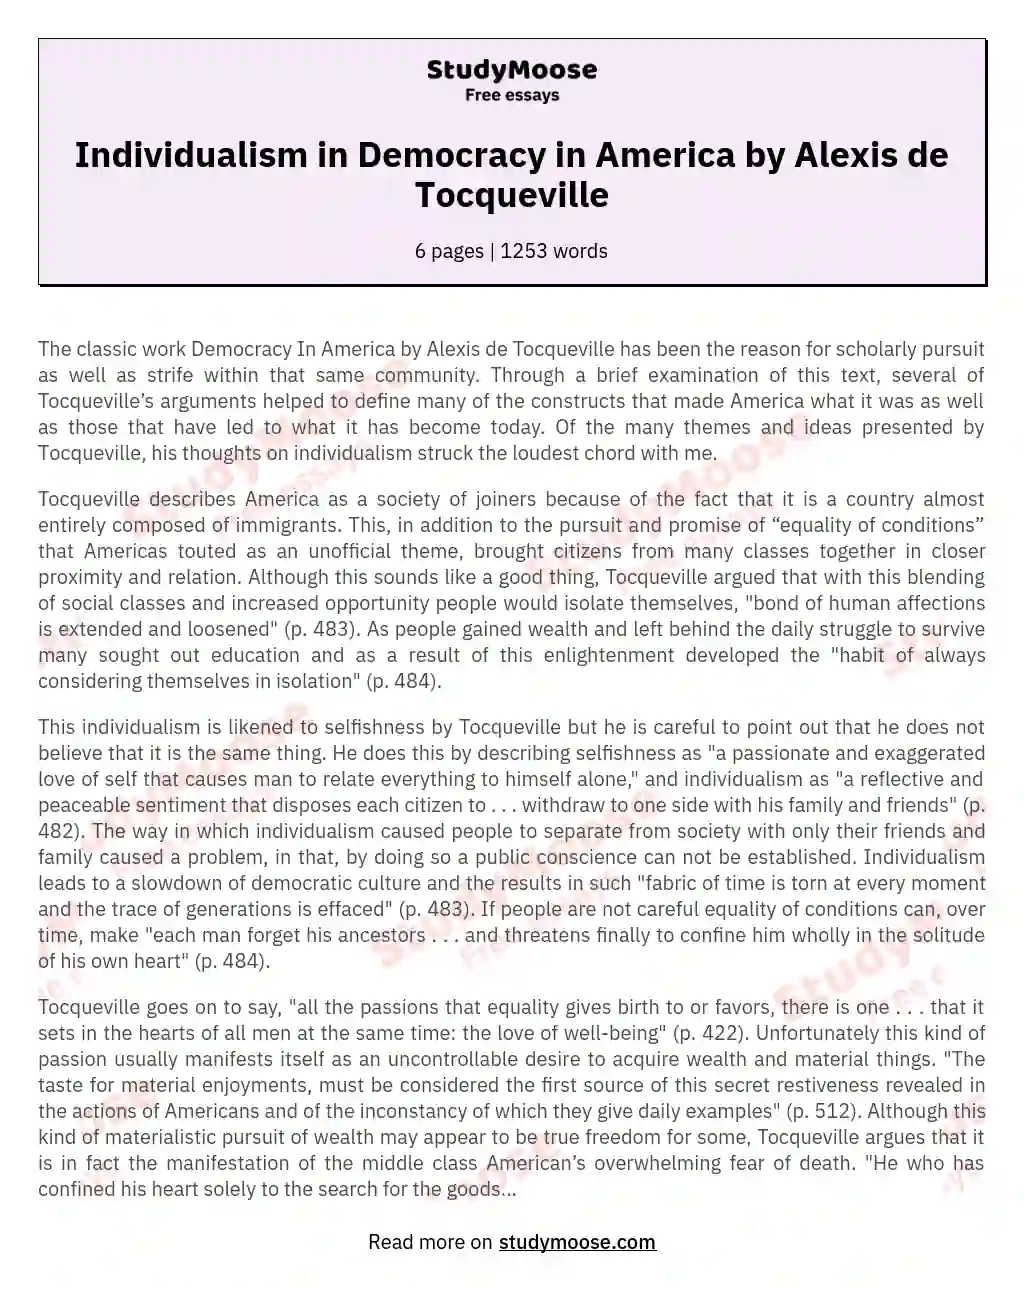 Individualism in Democracy in America by Alexis de Tocqueville essay